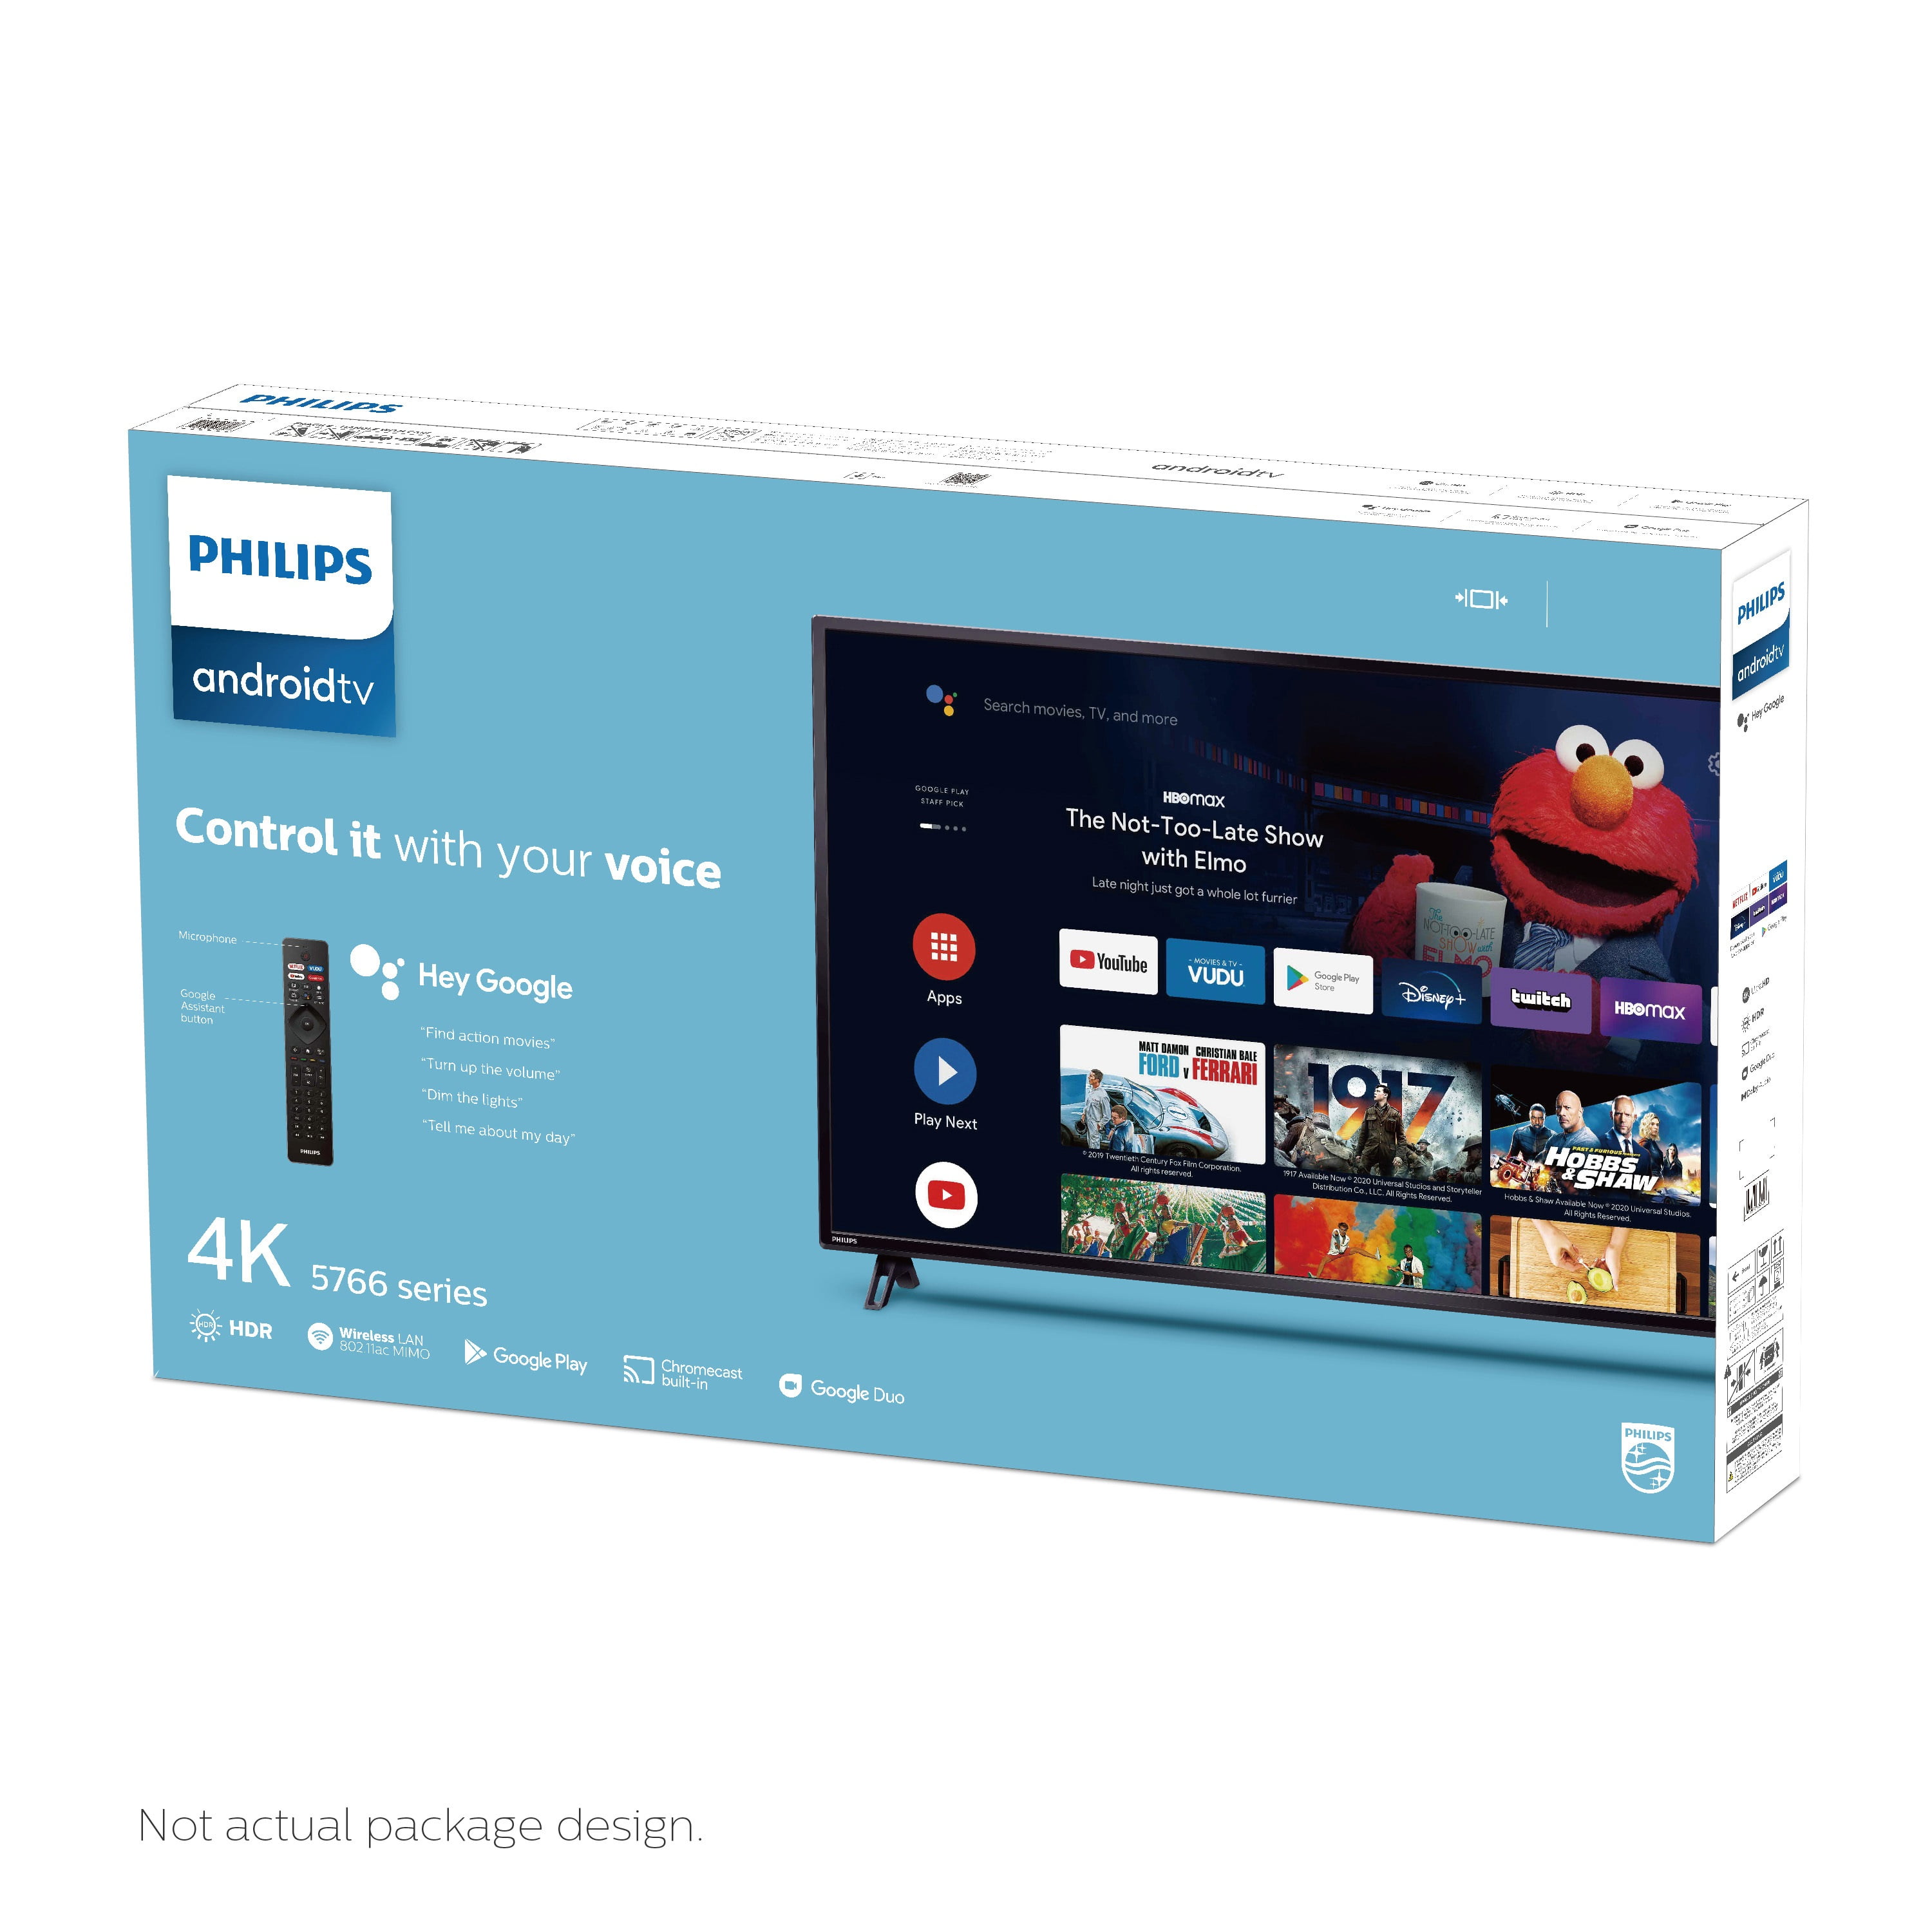 Philips Class 4K Ultra HD (2160p) Smart LED TV with Google Assistant (43PFL5766/F7) - Walmart.com